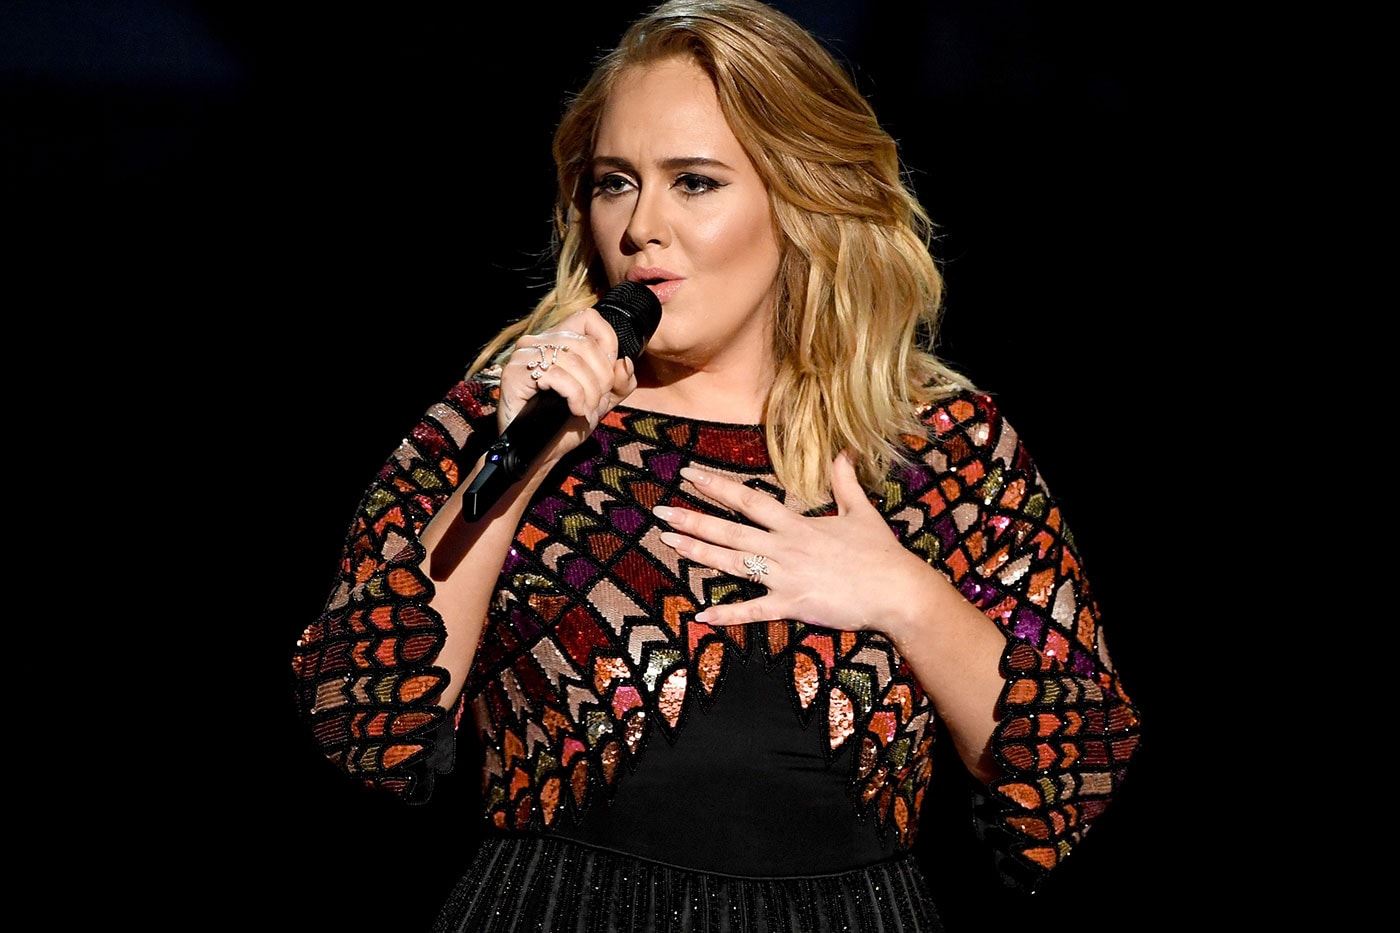 Adele 30 Best-Selling Album biggest debut 2021 surpasses drake certified lover boy taylor swift evermore clb 